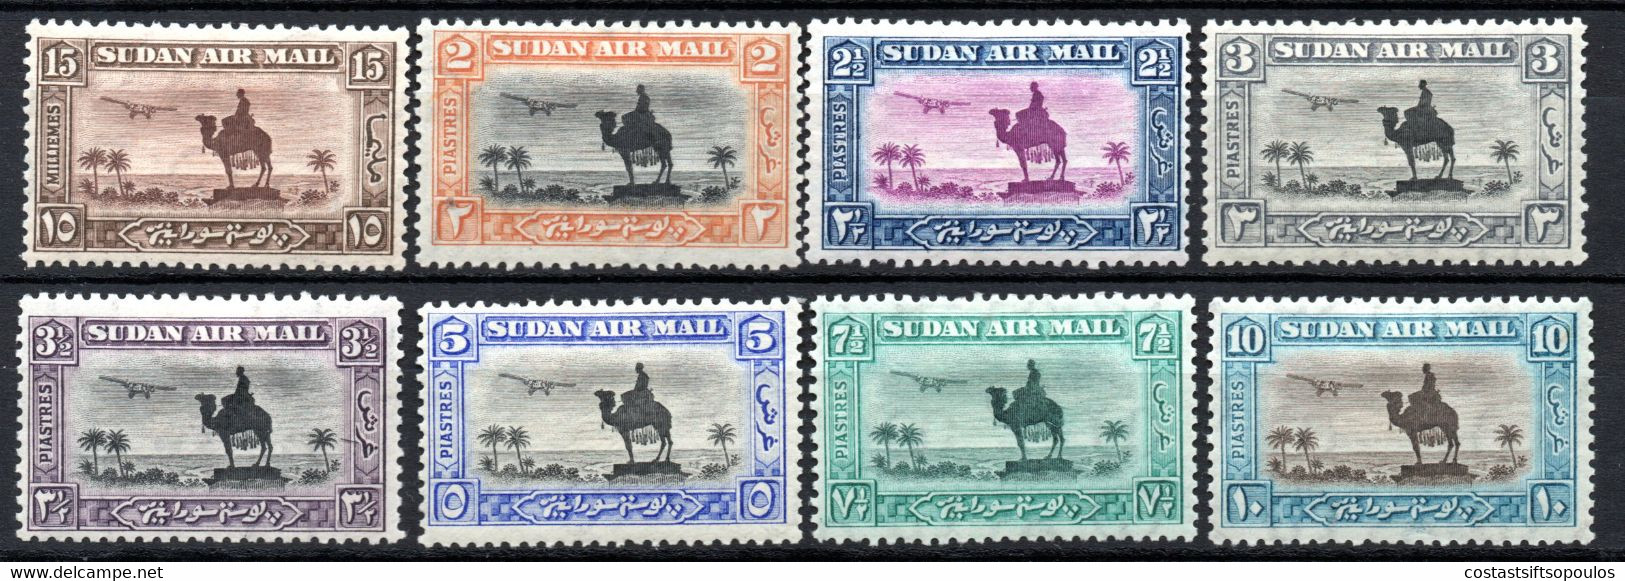 1389. SUDAN 1936-1937 GENERAL GORDON STATUE AIRMAIL #C23-C30 MH, VERY FINE AND FRESH - Sudan (...-1951)